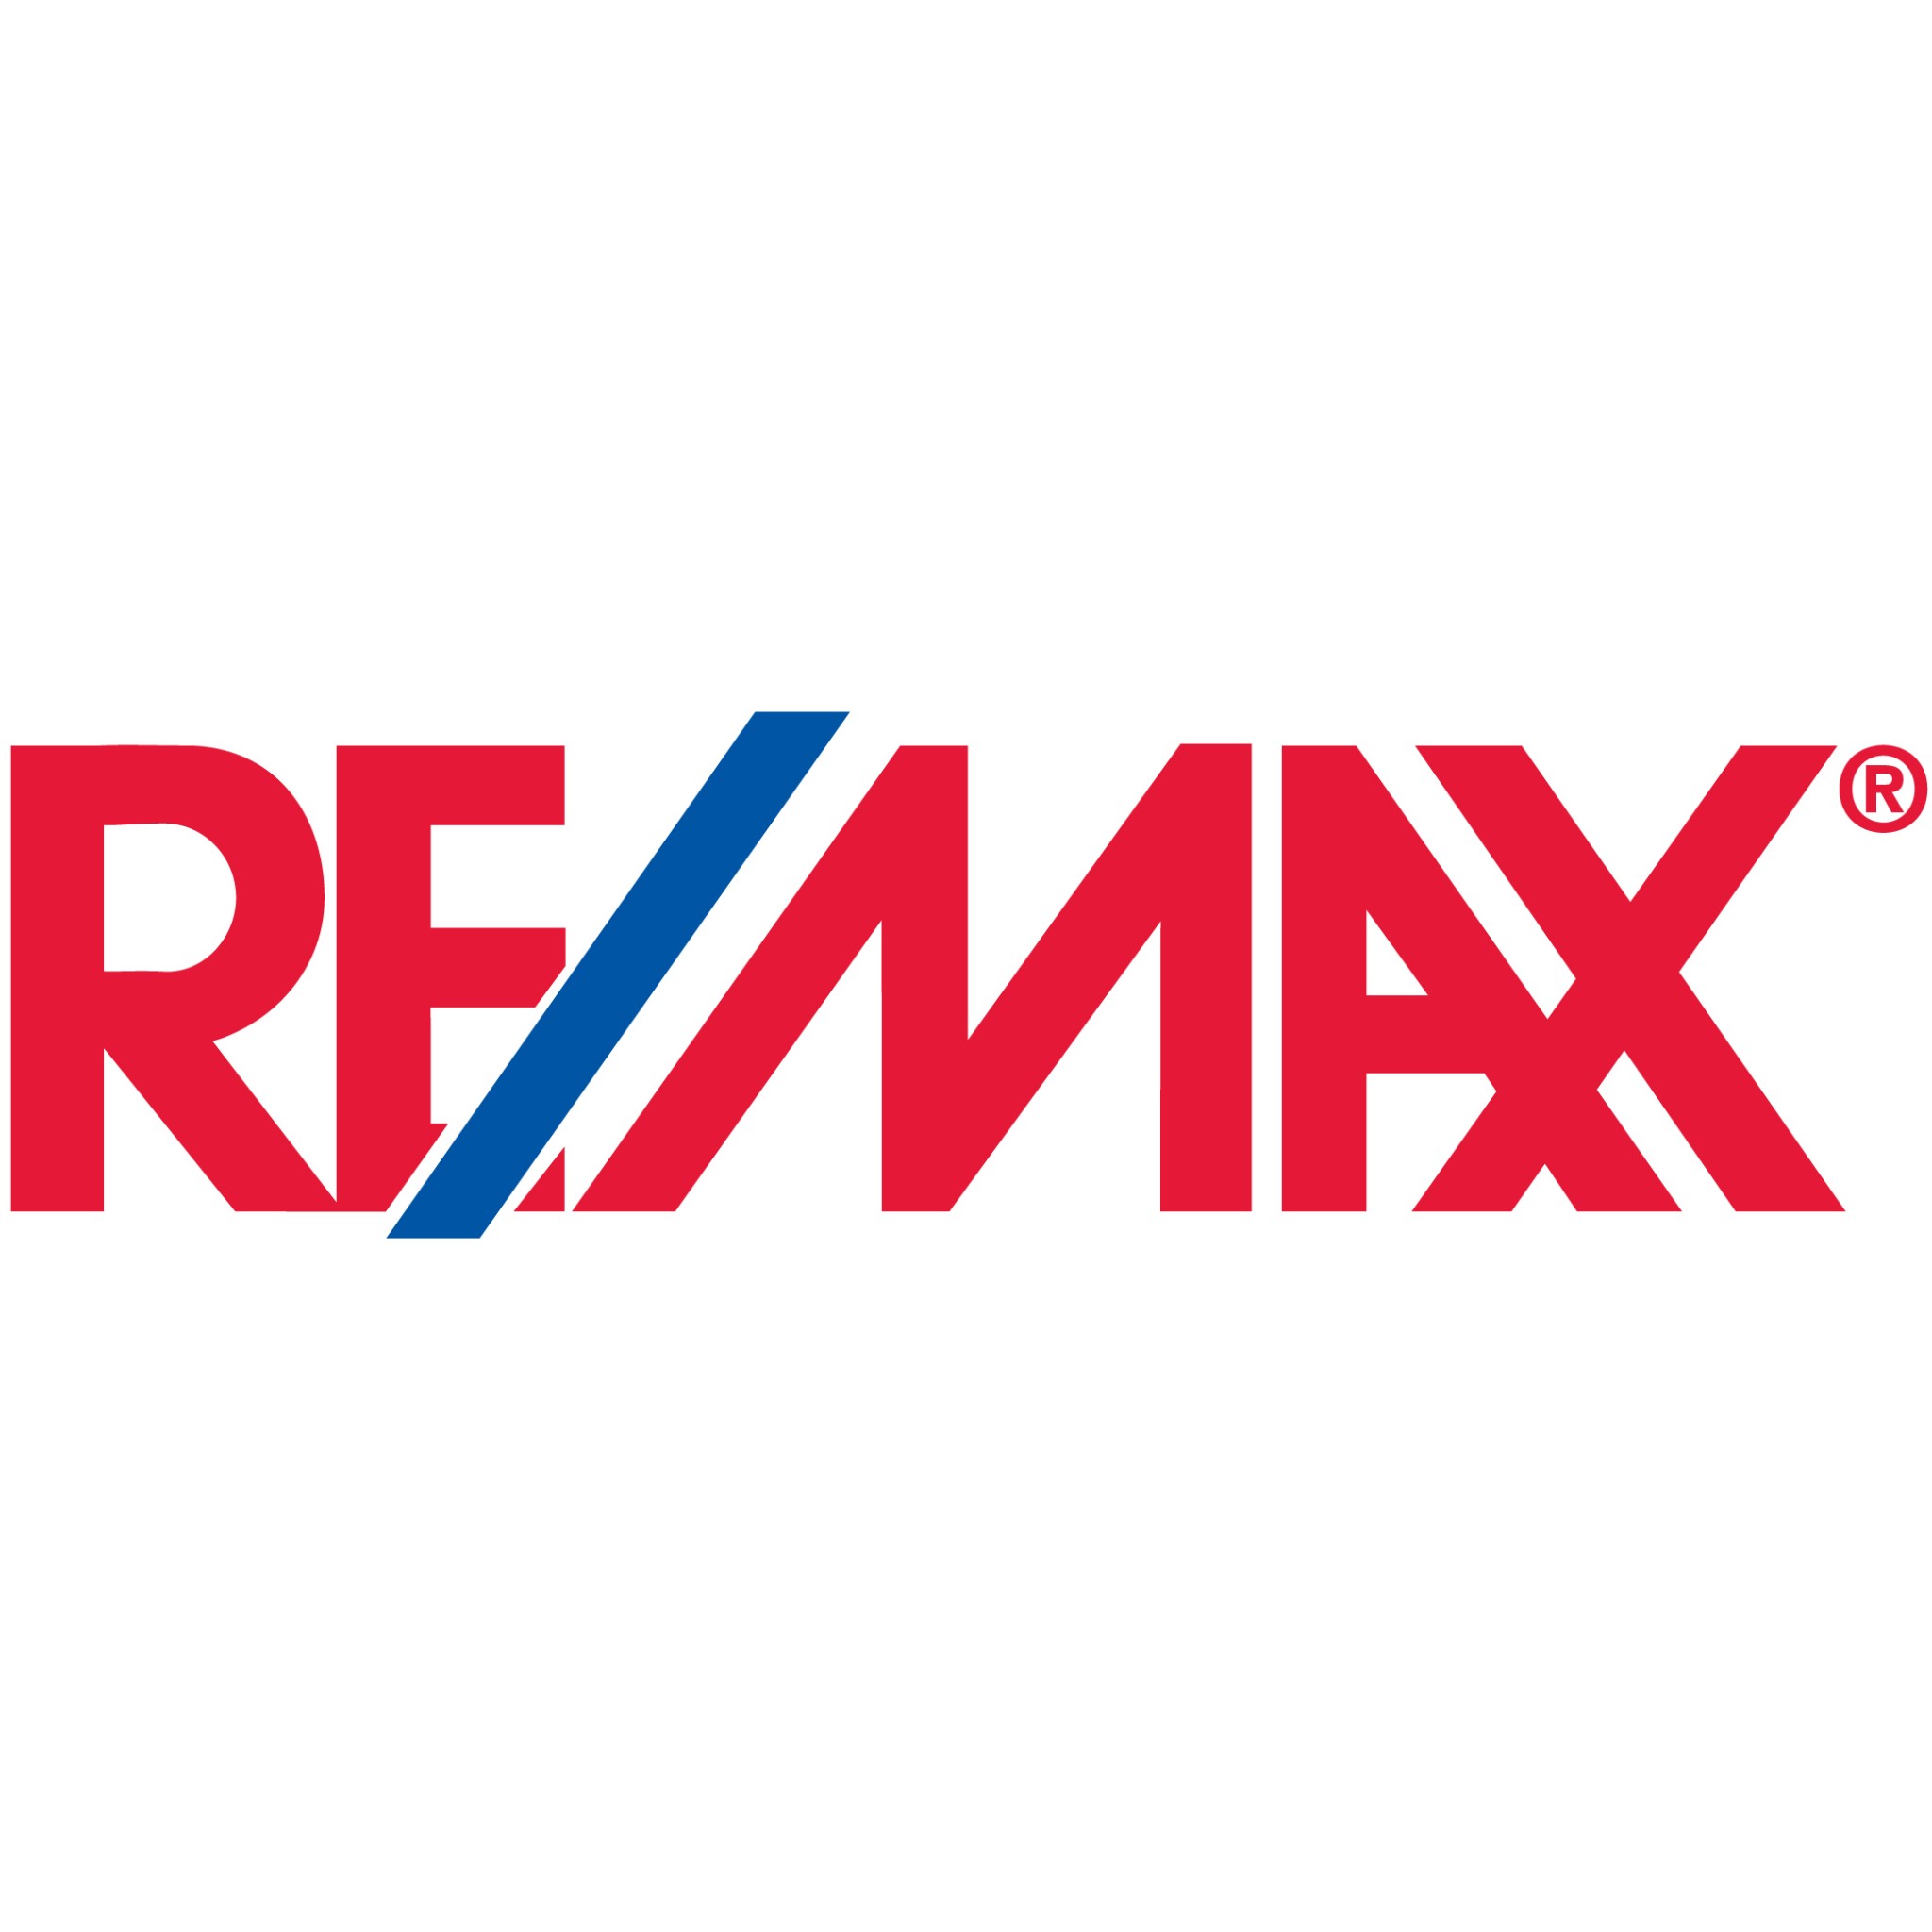 REMAX_logo500w_HiRes-7adb5b.jpg